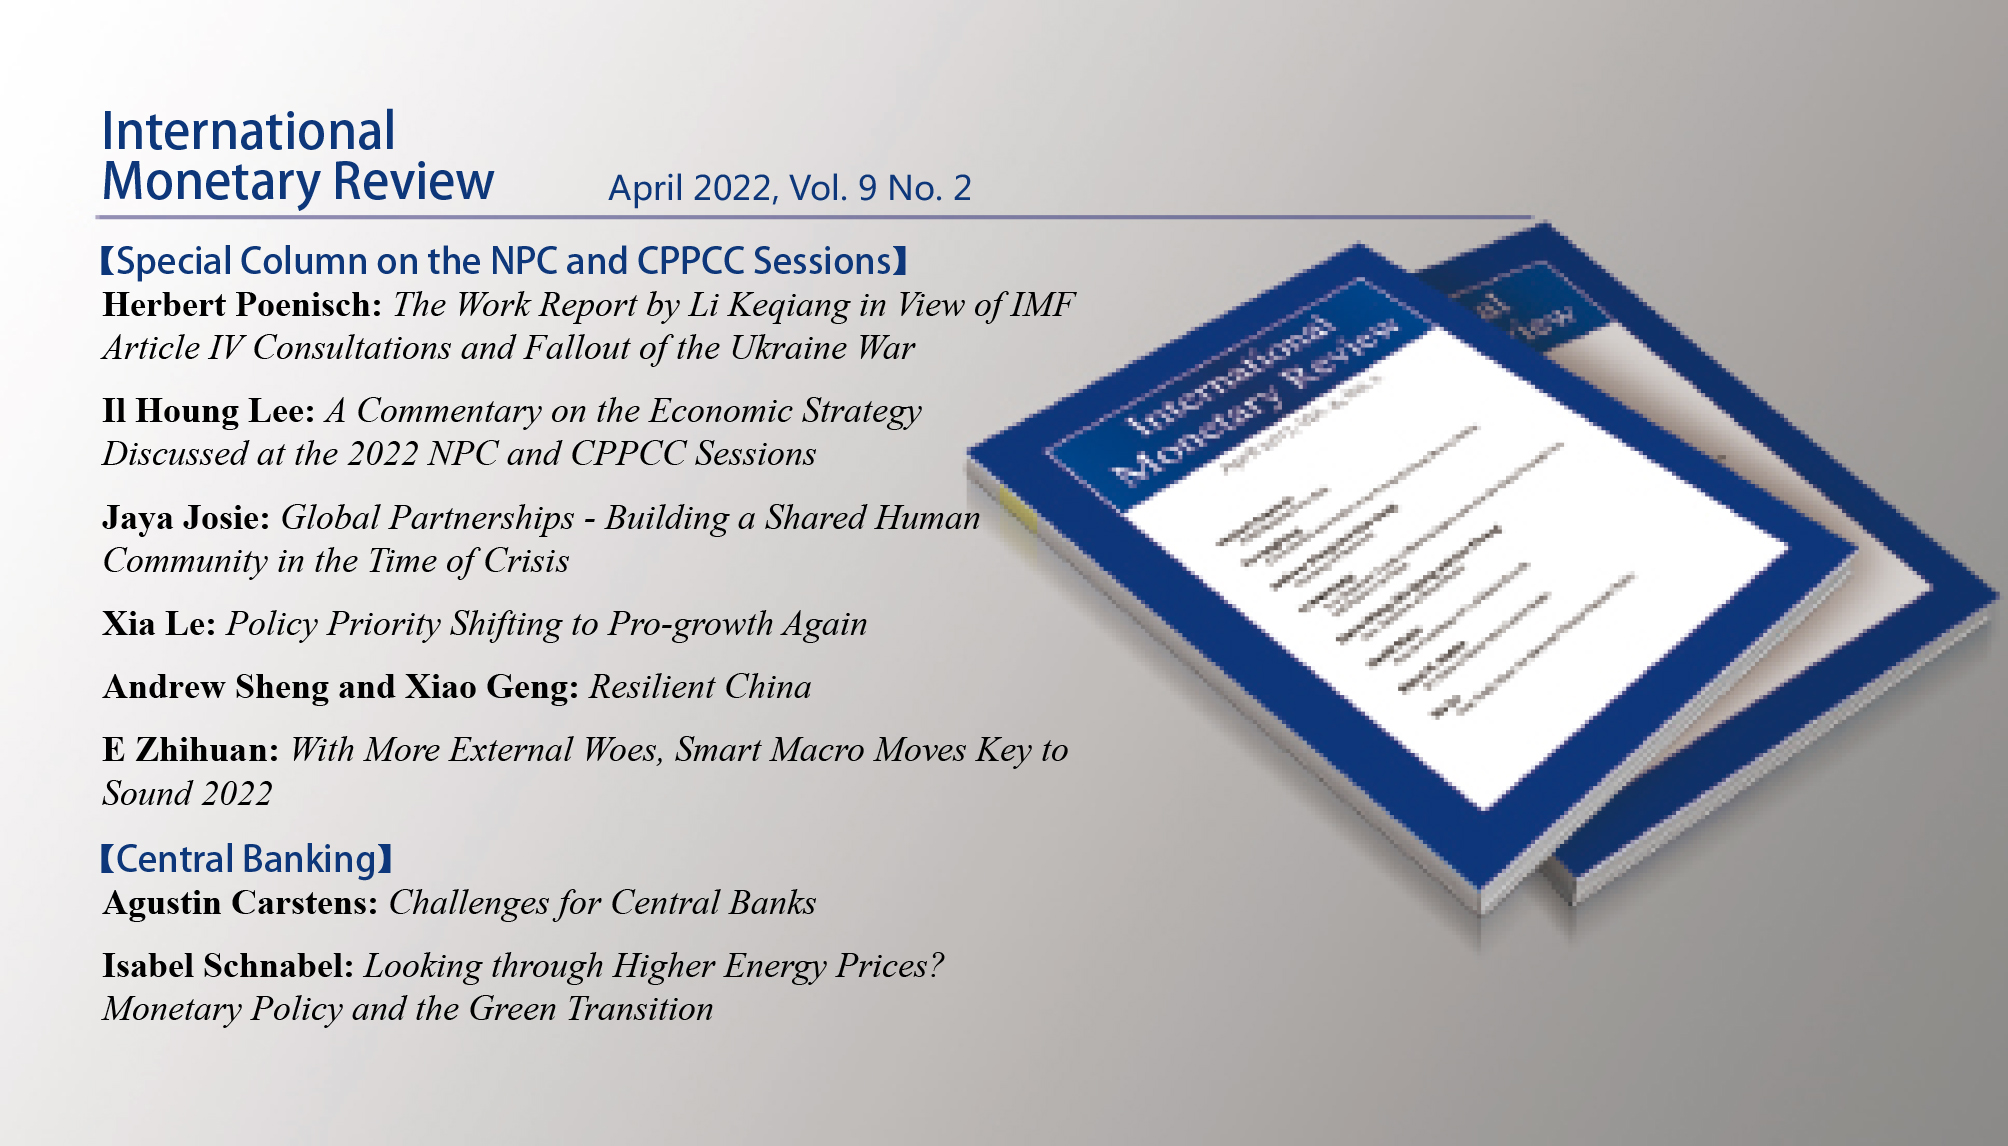 International Monetary Review, April 2022, Vol. 9 No. 2